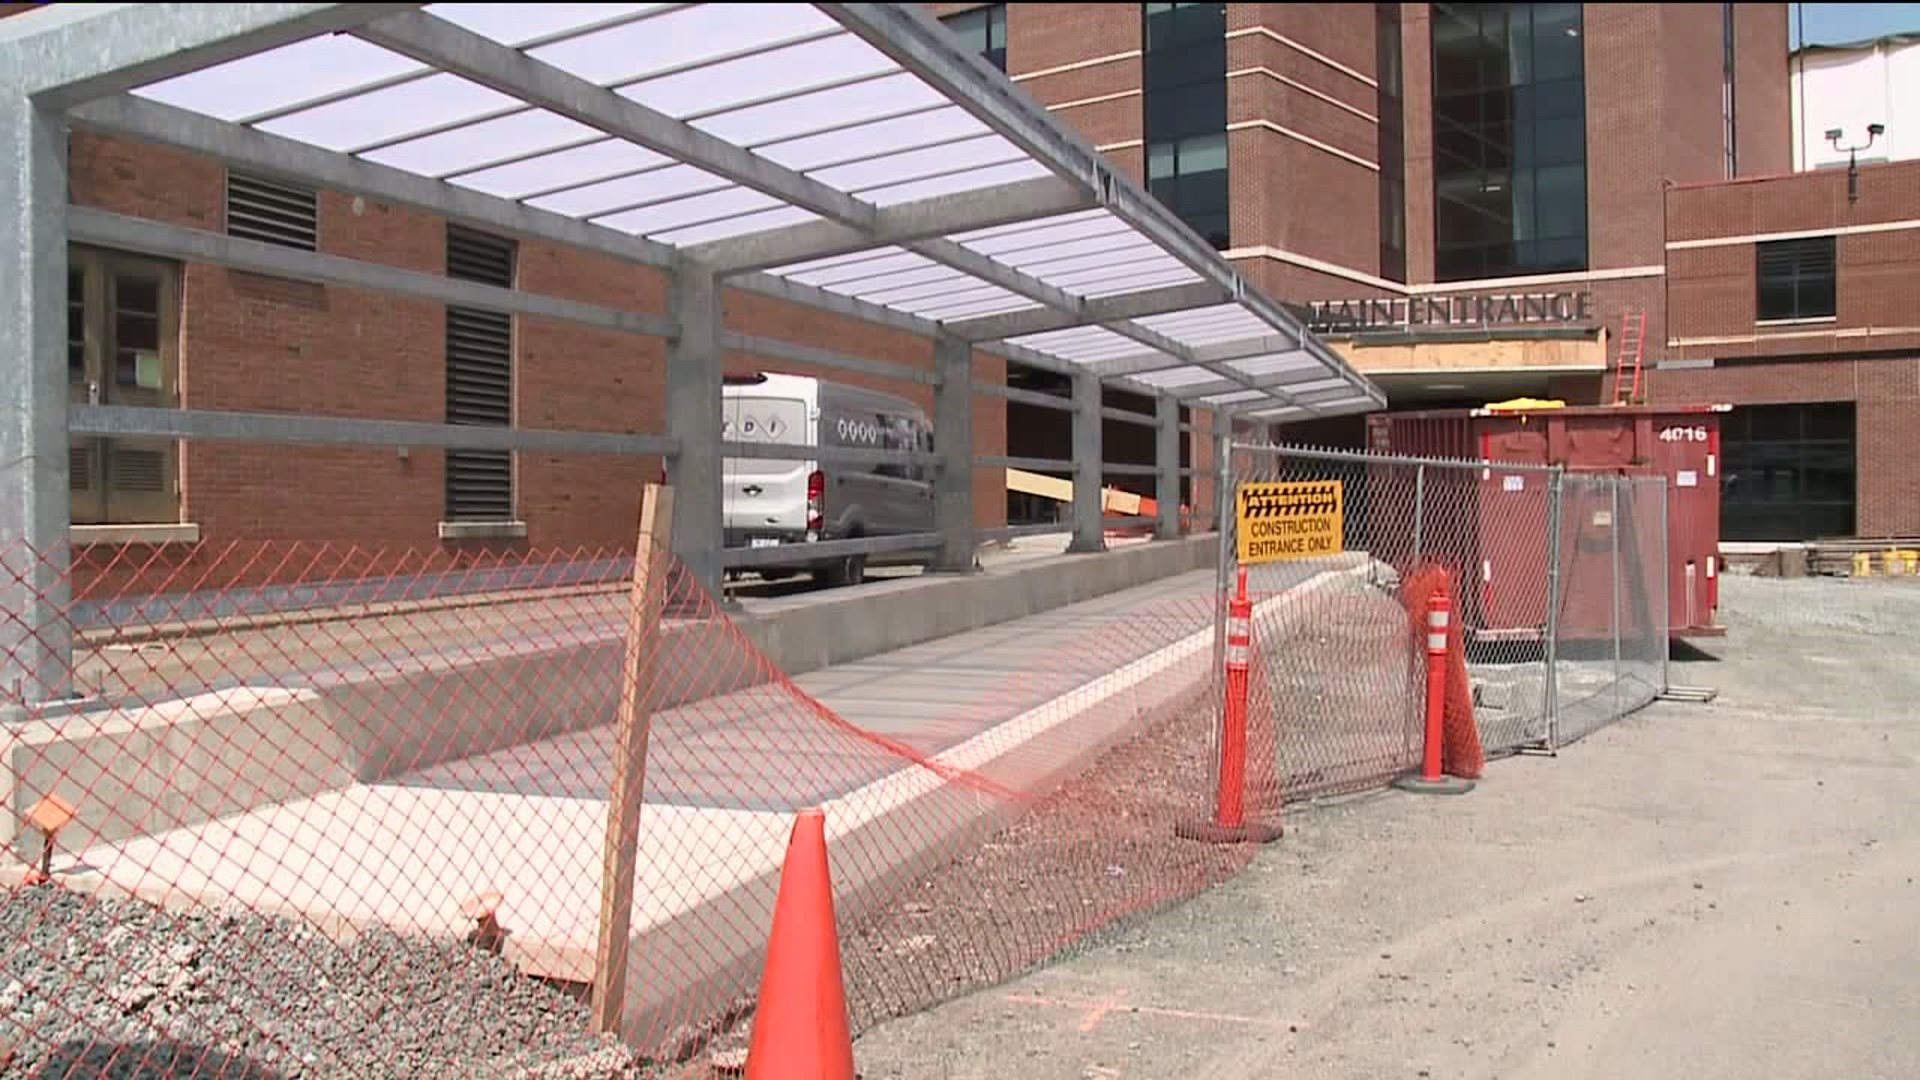 Sneak Peek Inside Wayne Memorial Hospital Expansion